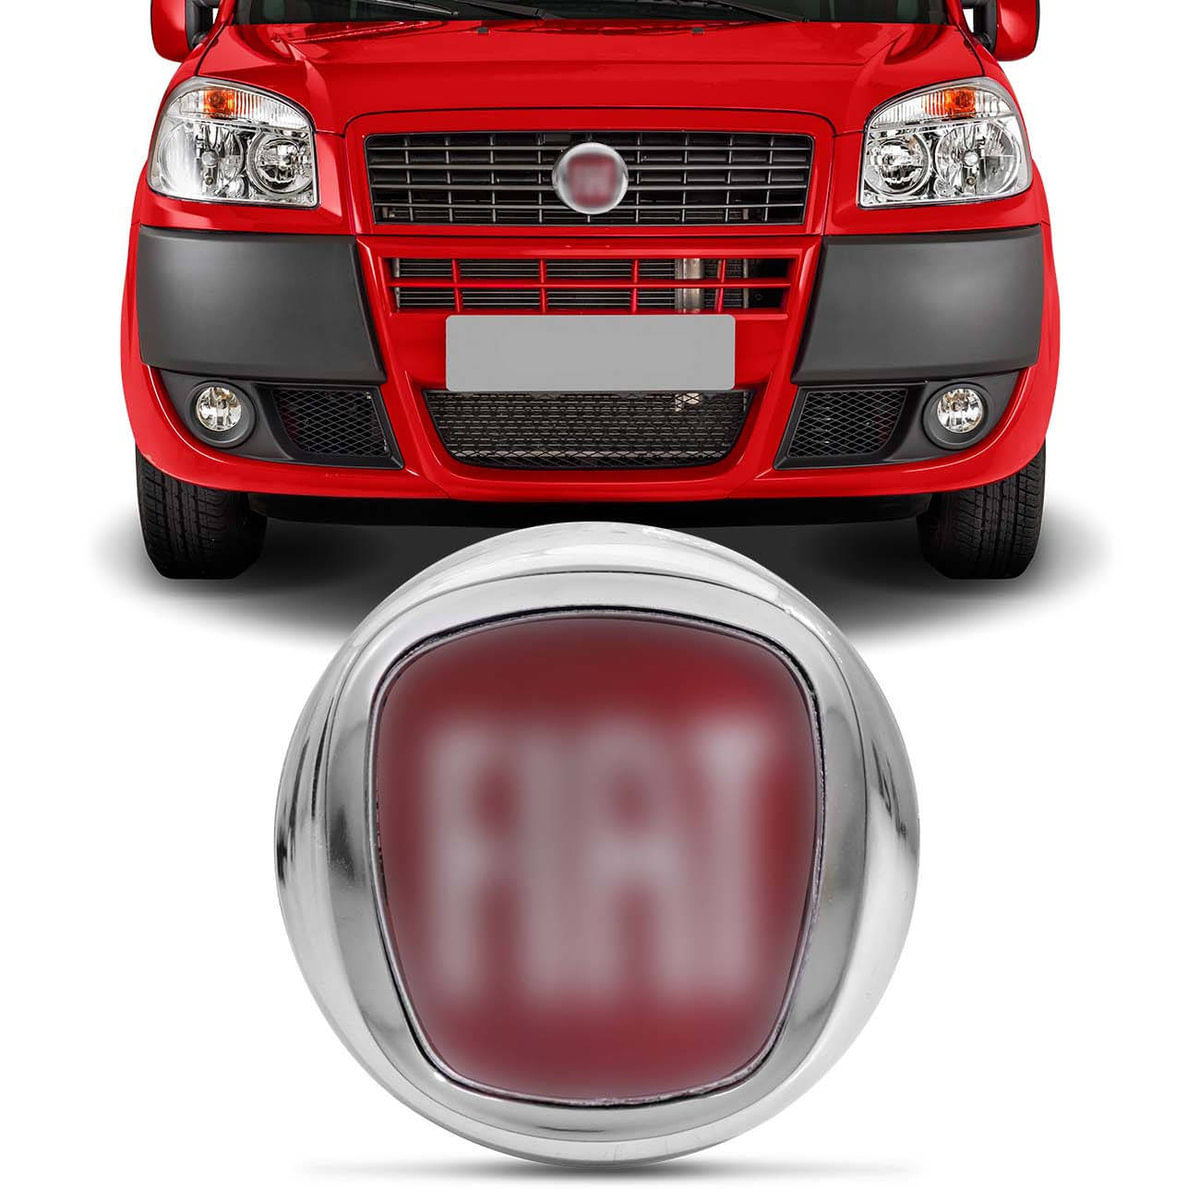 Emblema Fiat Grade Dianteira Tampa Traseira Doblo Idea Adventure Palio Fire Stilo Uno Mille Vermelho